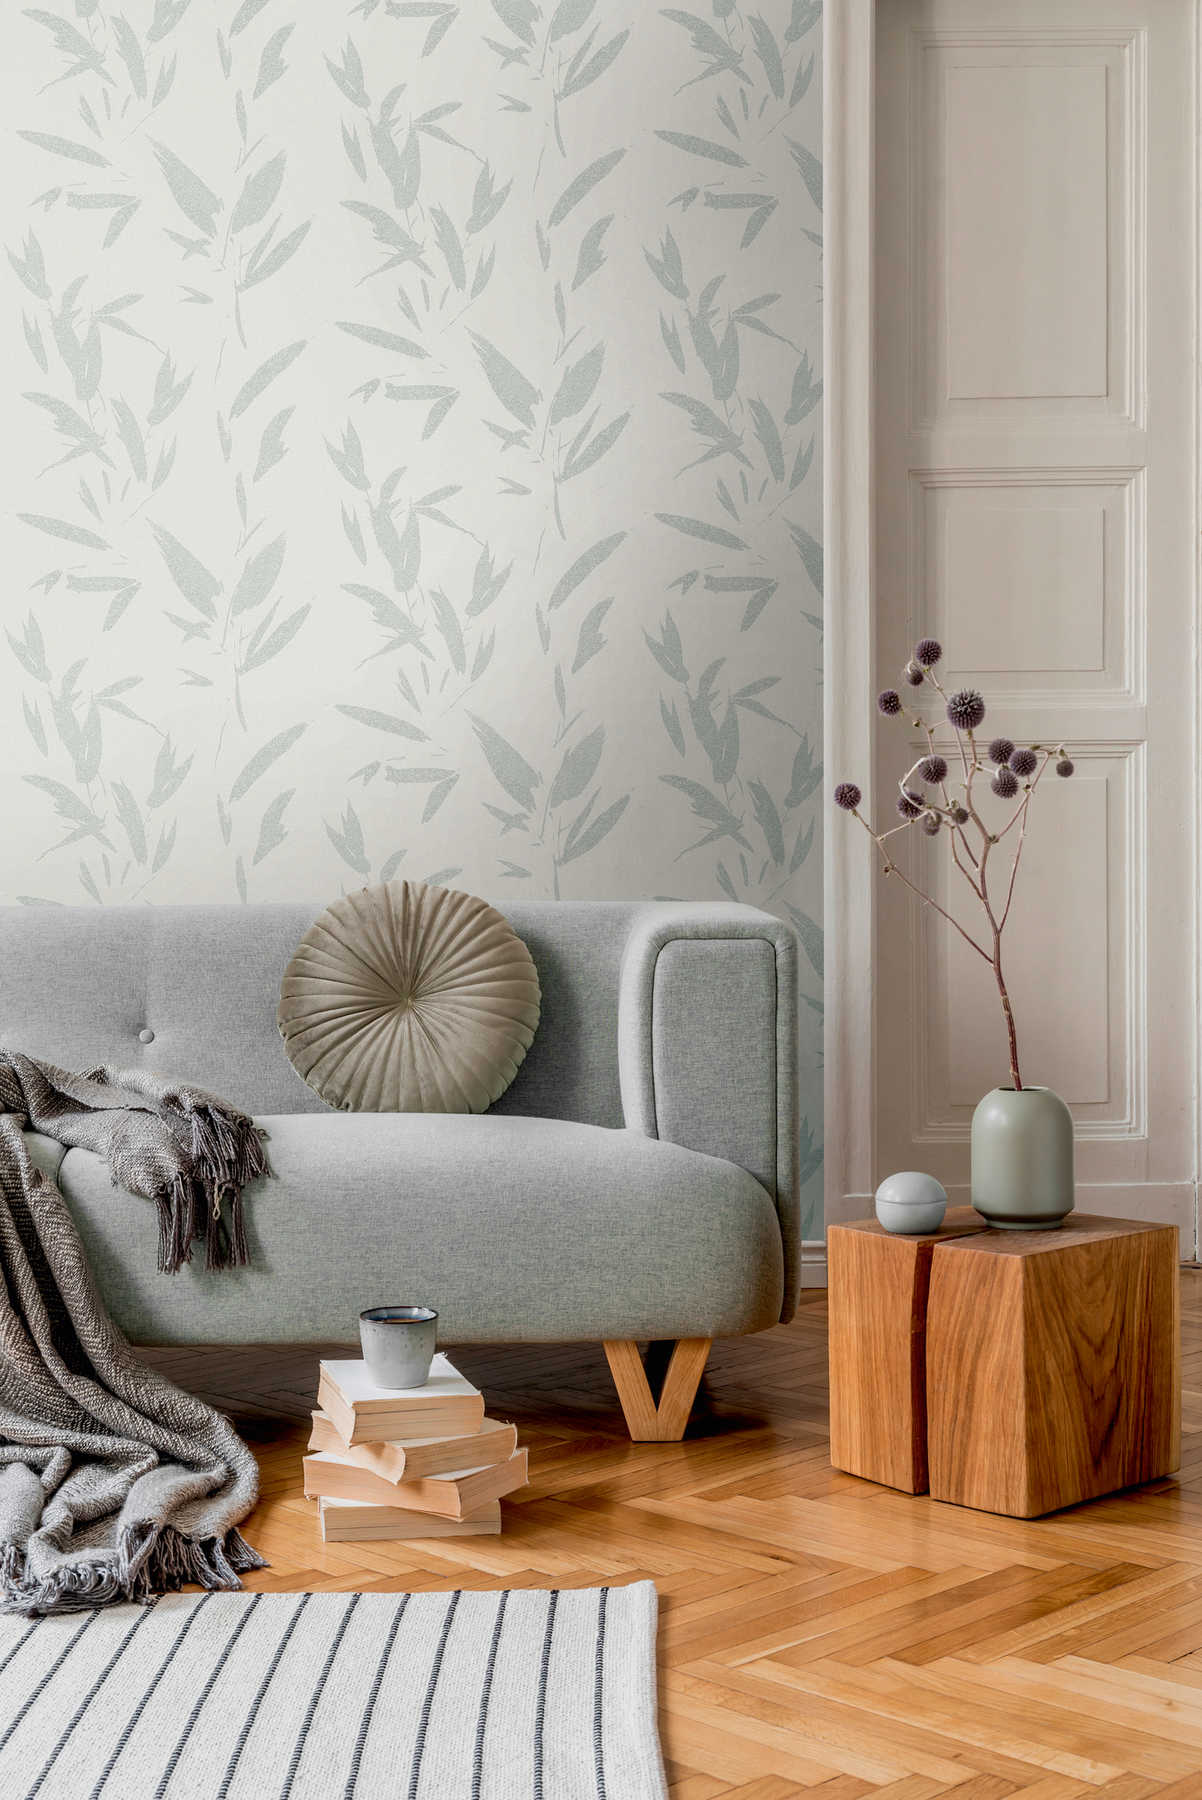             Vliestapete Blättermotiv abstrakt, Textiloptik – Weiß, Creme, Grau
        